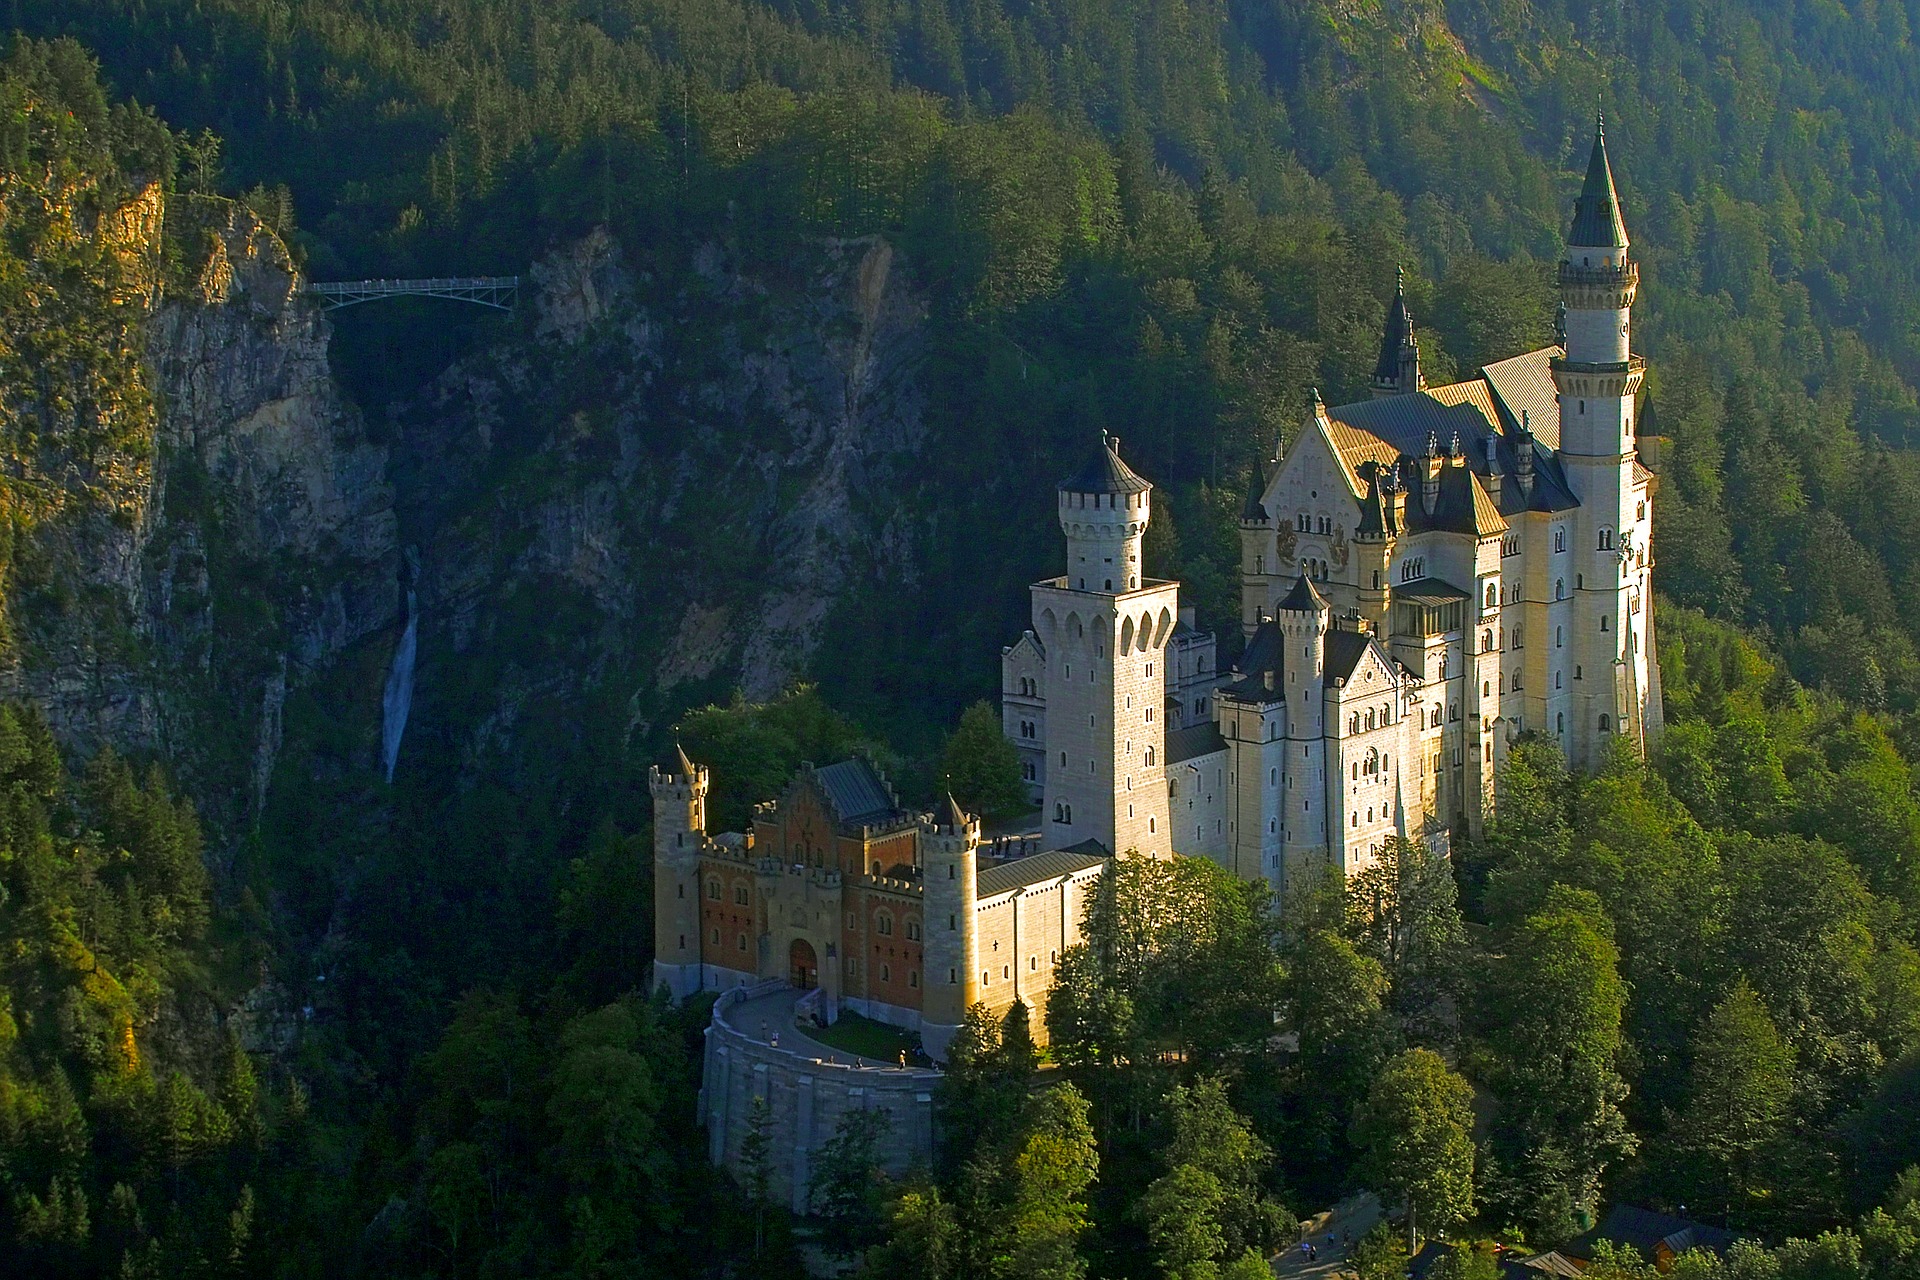 Schloss Neuschwanstein is the fairy tale castle build by King Ludwig II of Bavaria.